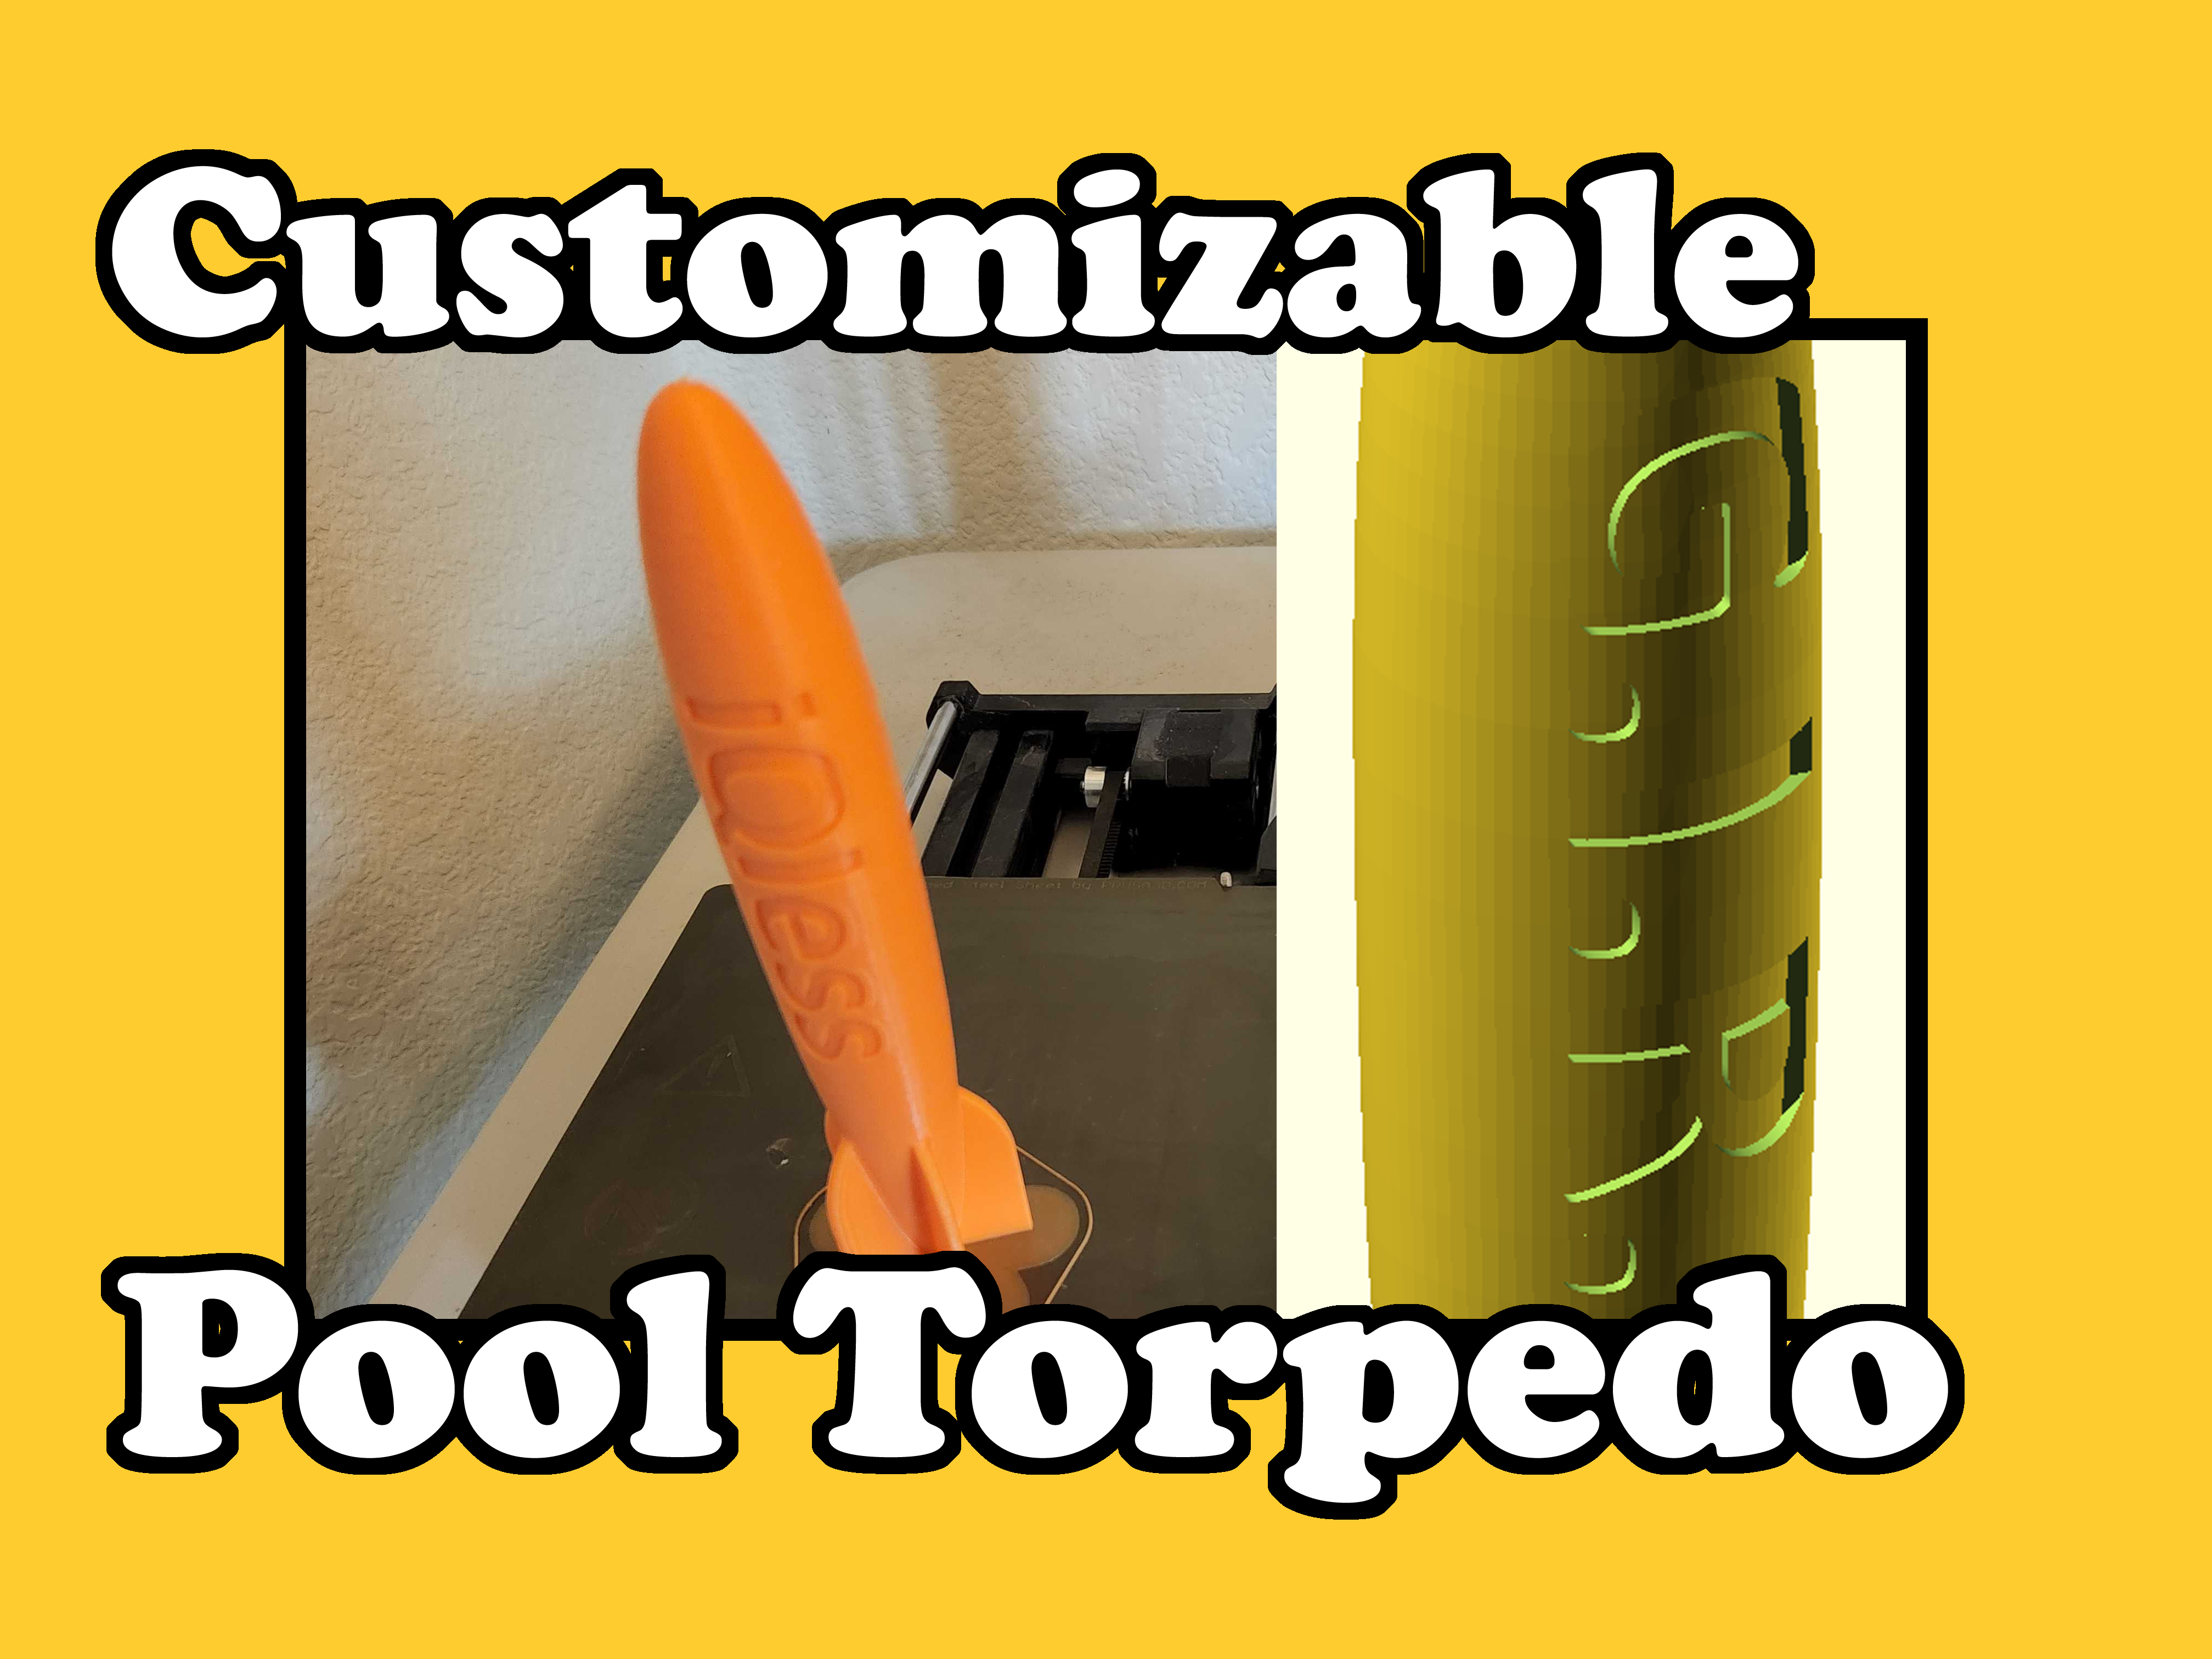 Customizable Pool Torpedo